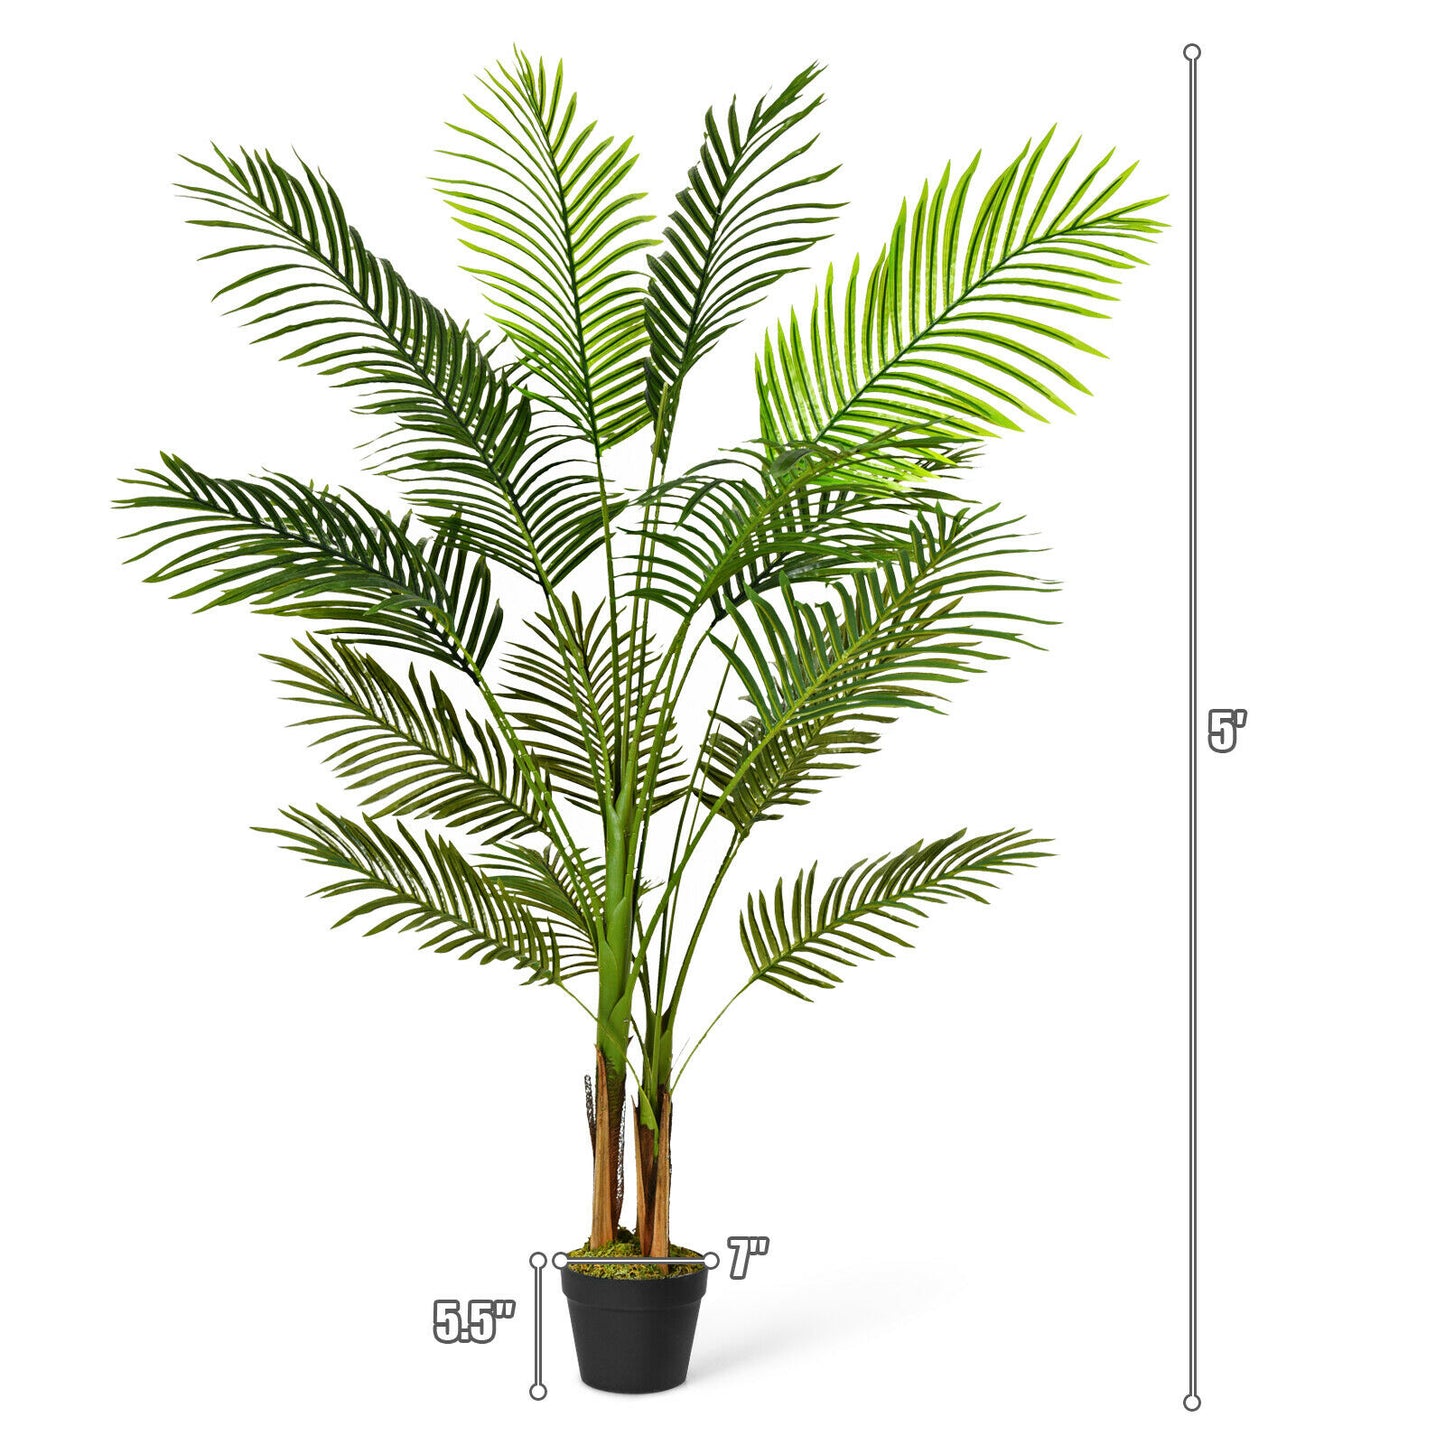 5Ft Artificial Phoenix Palm Tree